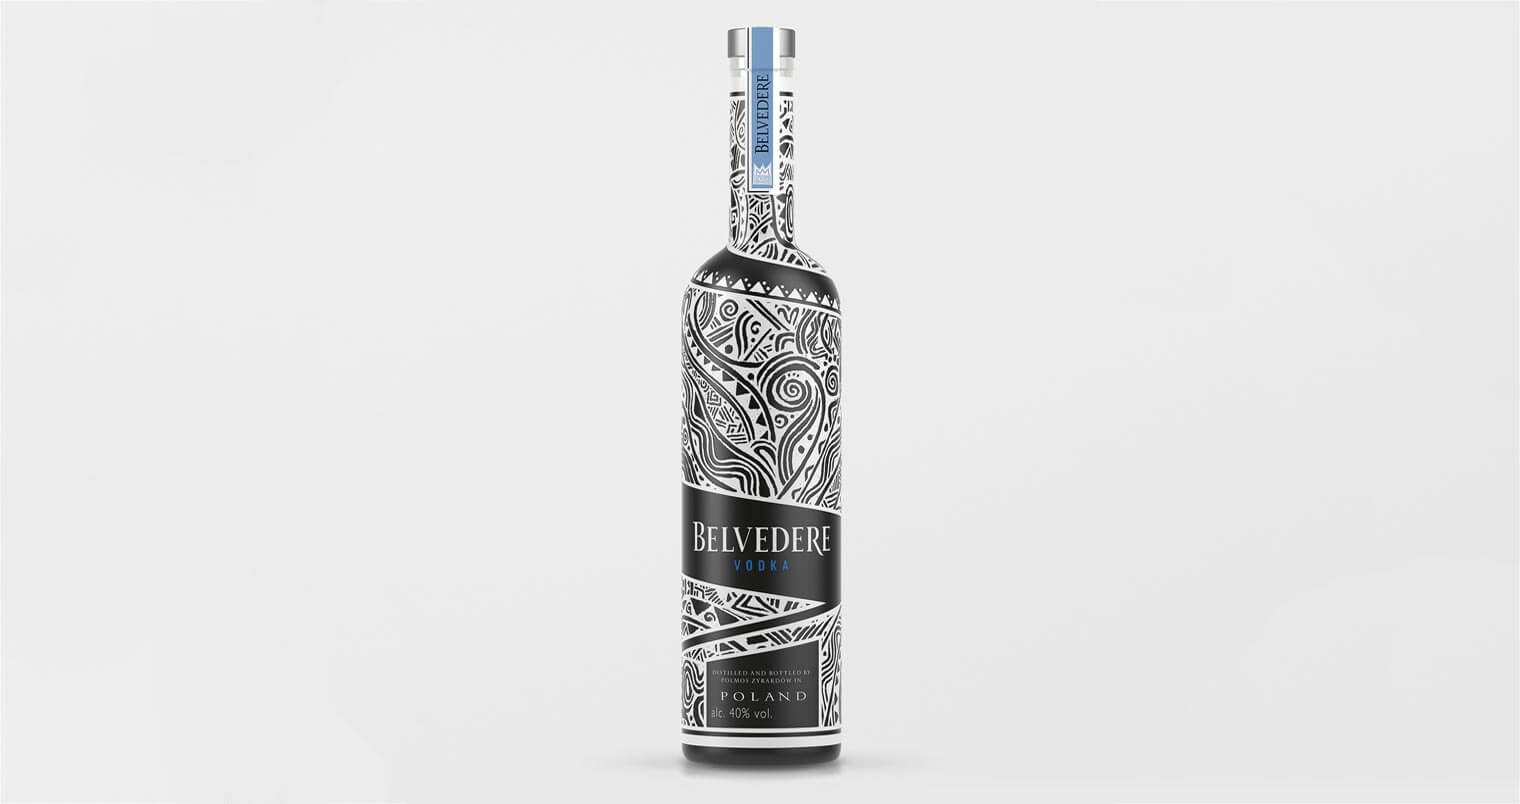 Belvedere vodka debuts Ushuaïa limited edition bottle at Ibiza